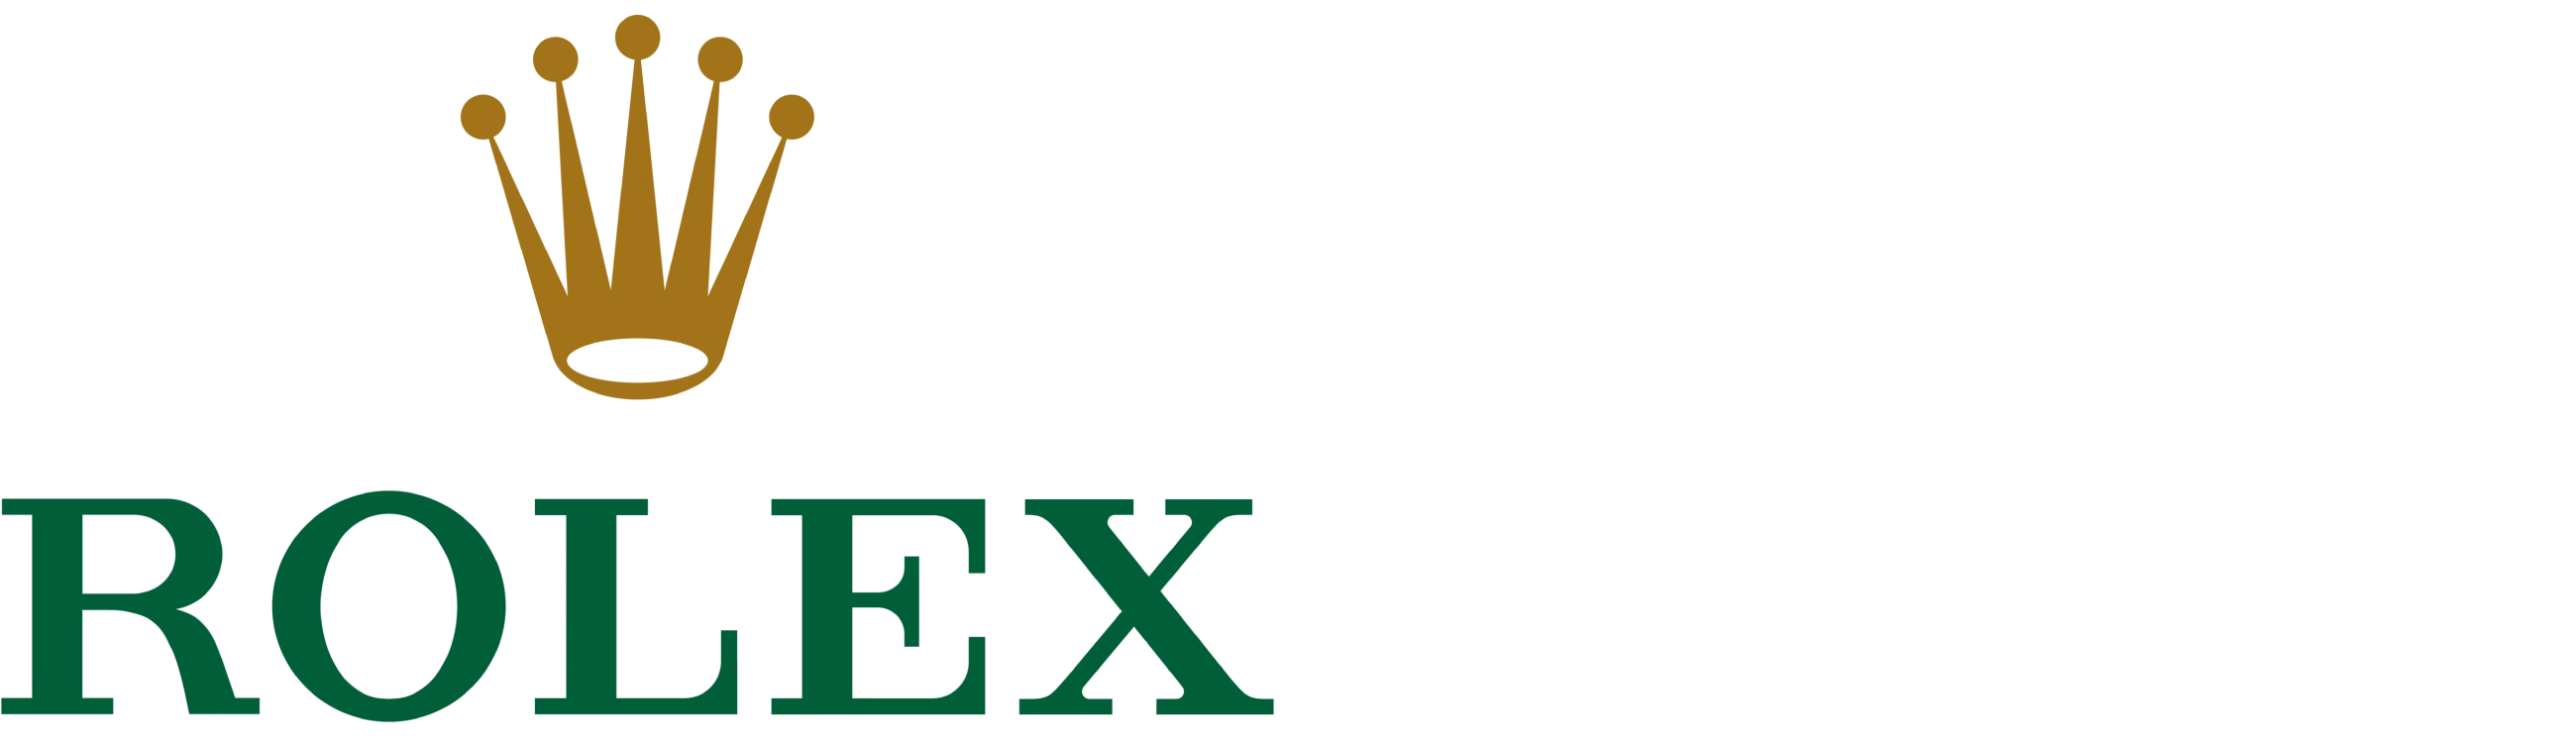 A logo of the Rolex brand